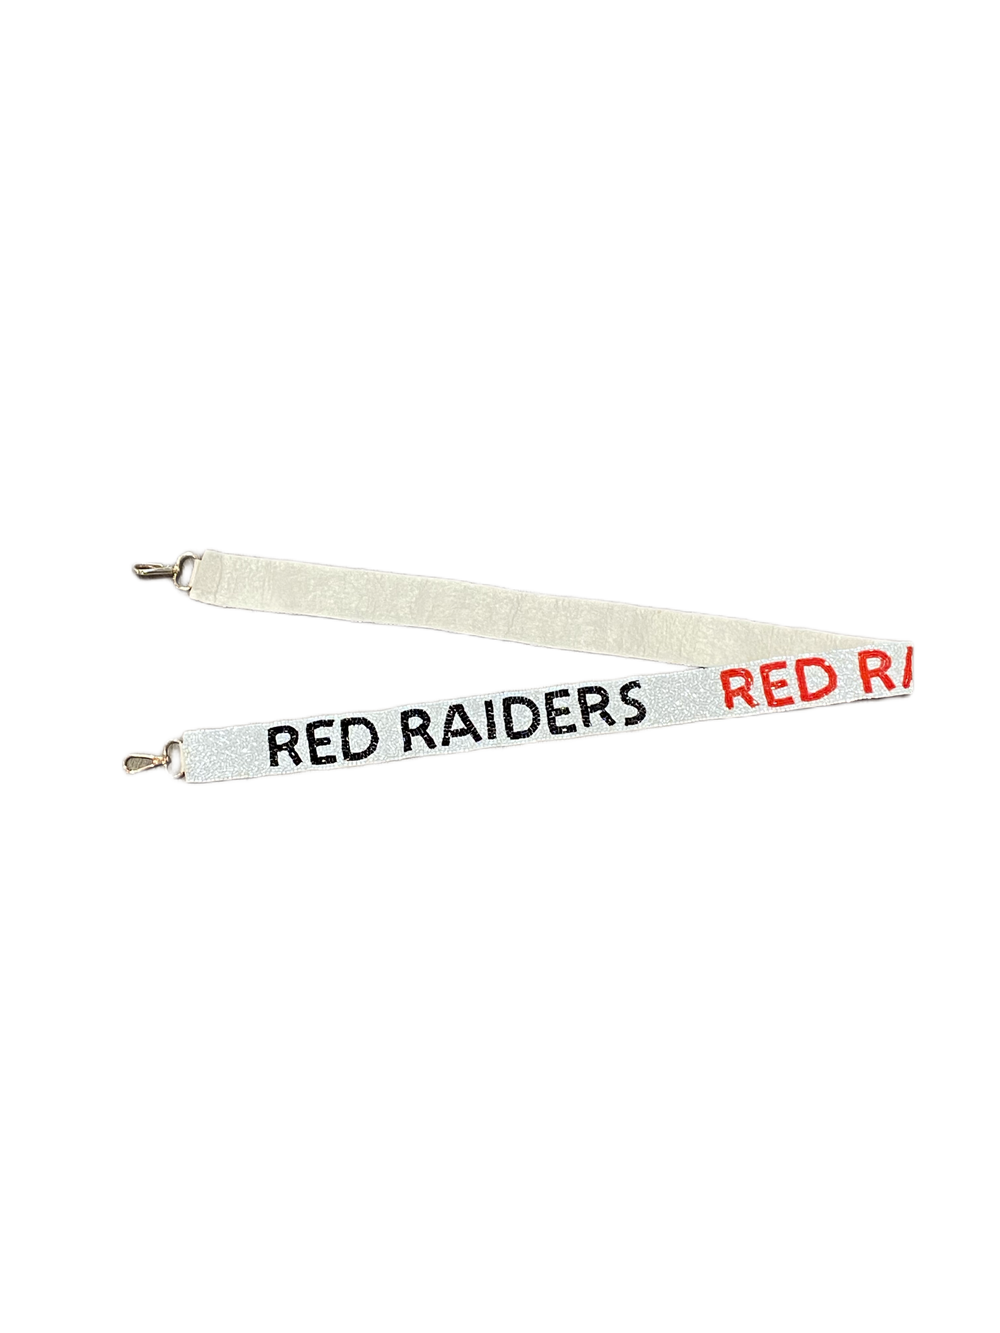 Red Raiders Strap